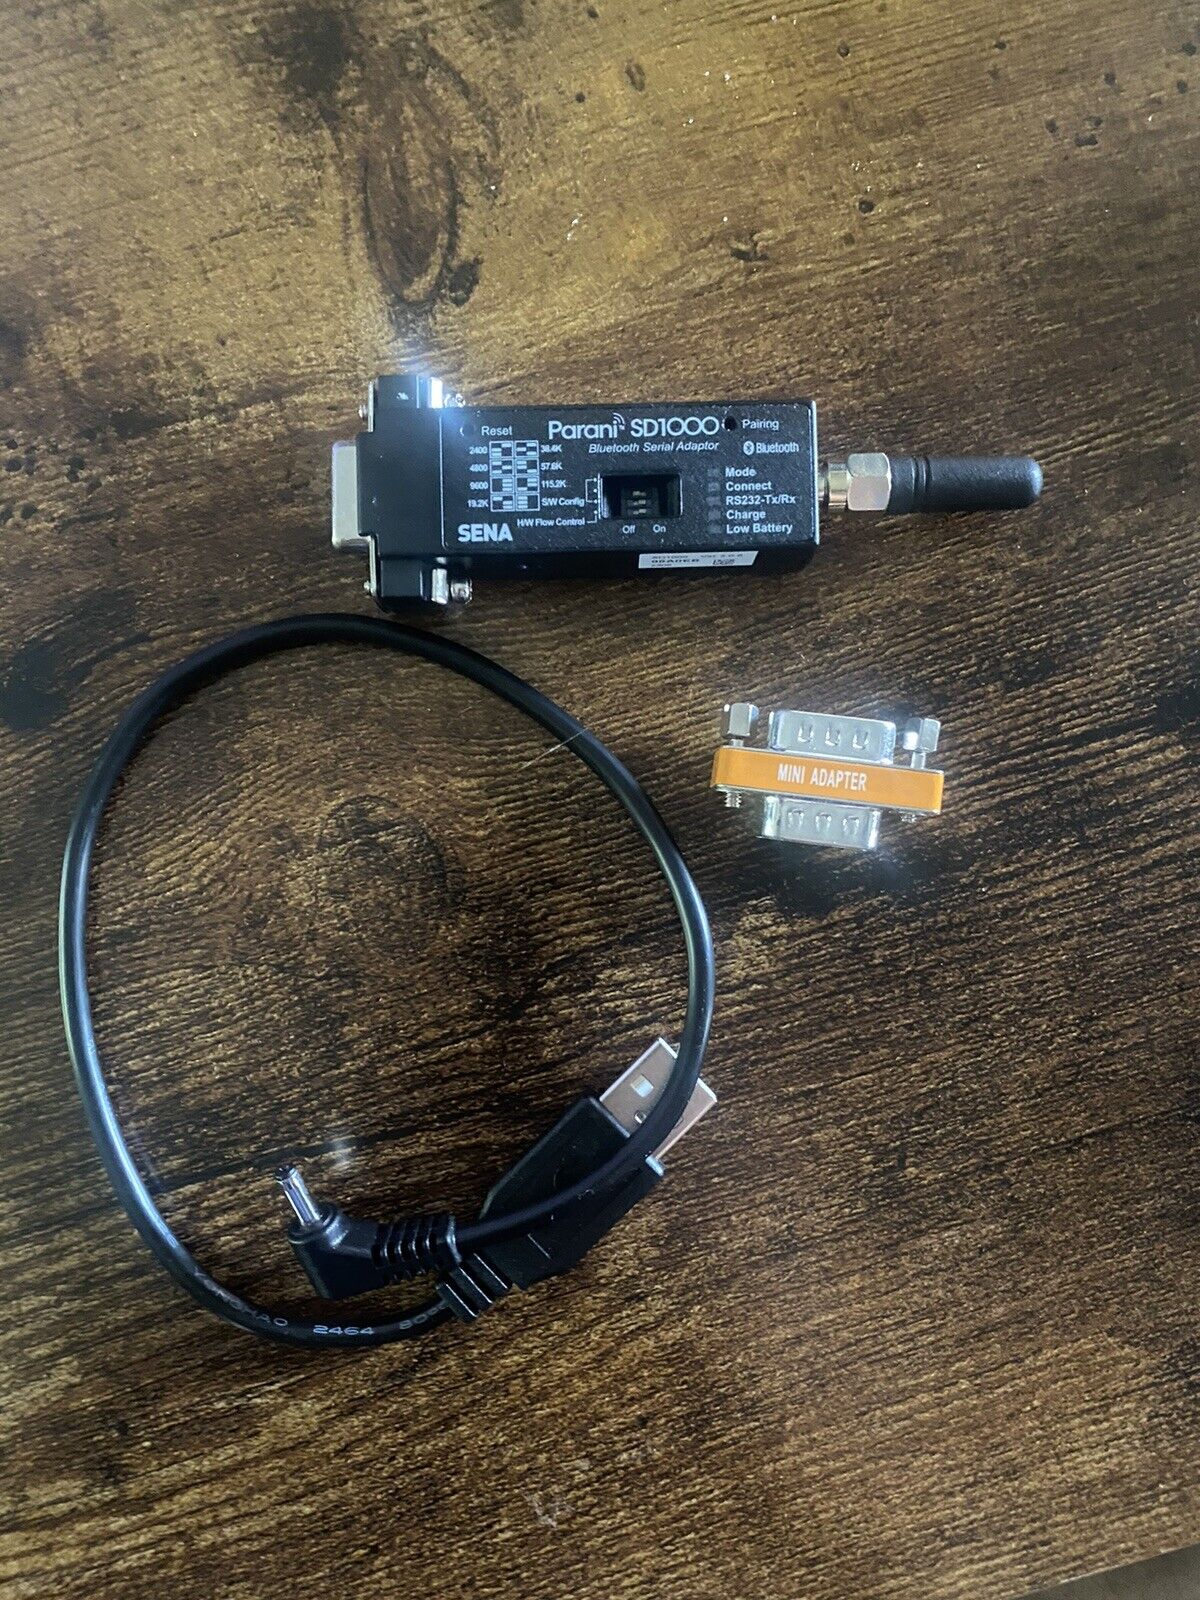 Sena SD1000 Long Range Bluetooth Serial Adapter